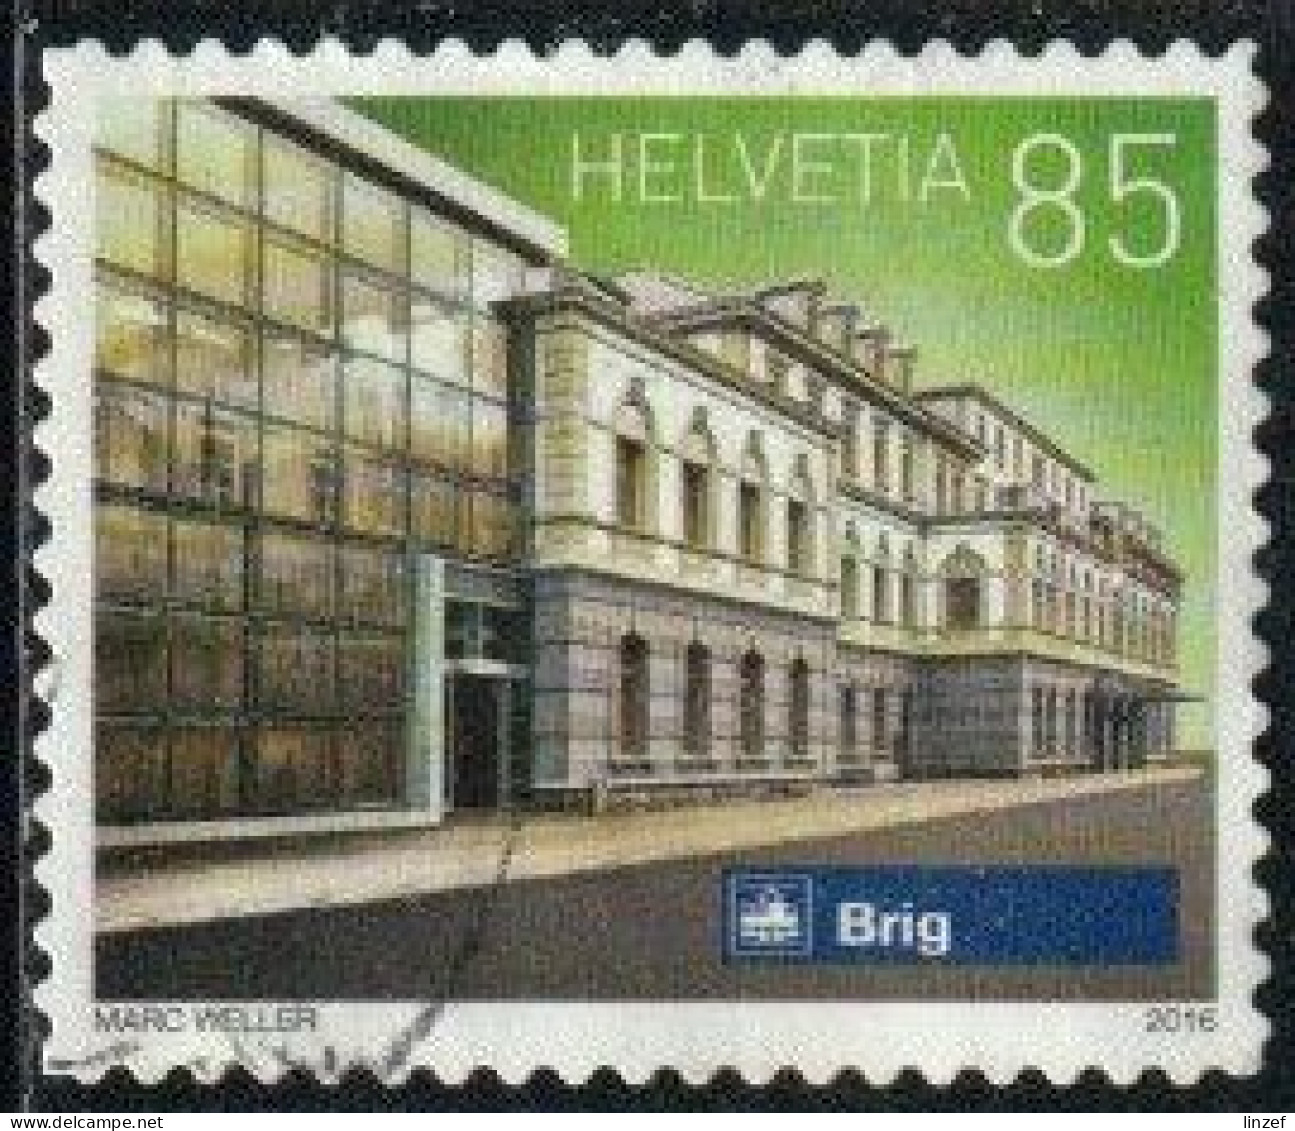 Suisse 2016 Yv. N°2385 - Gare De Brigue - Oblitéré - Used Stamps